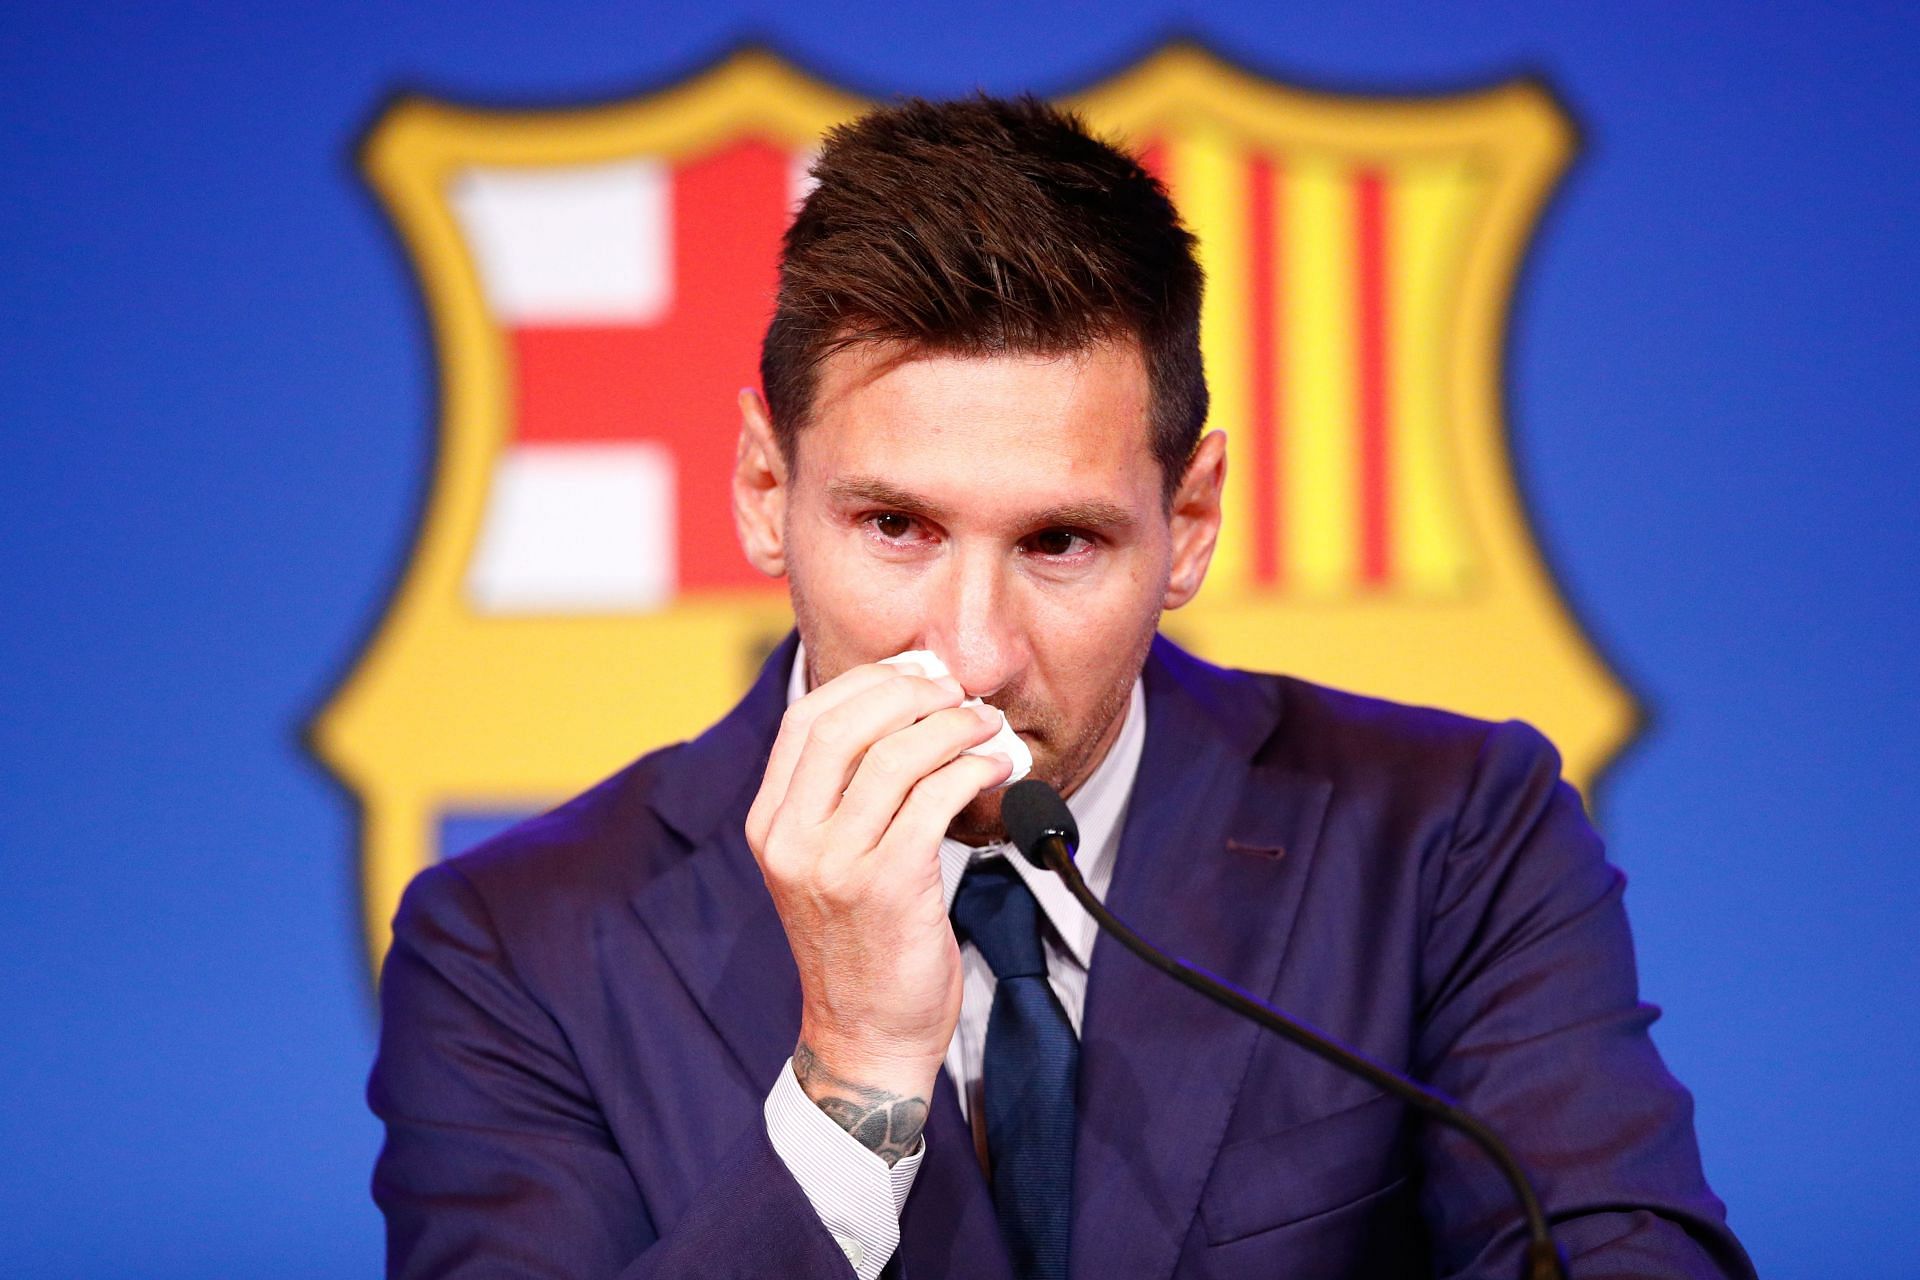 The Barcelona hero wept as he bid farewell to Camp Nou.